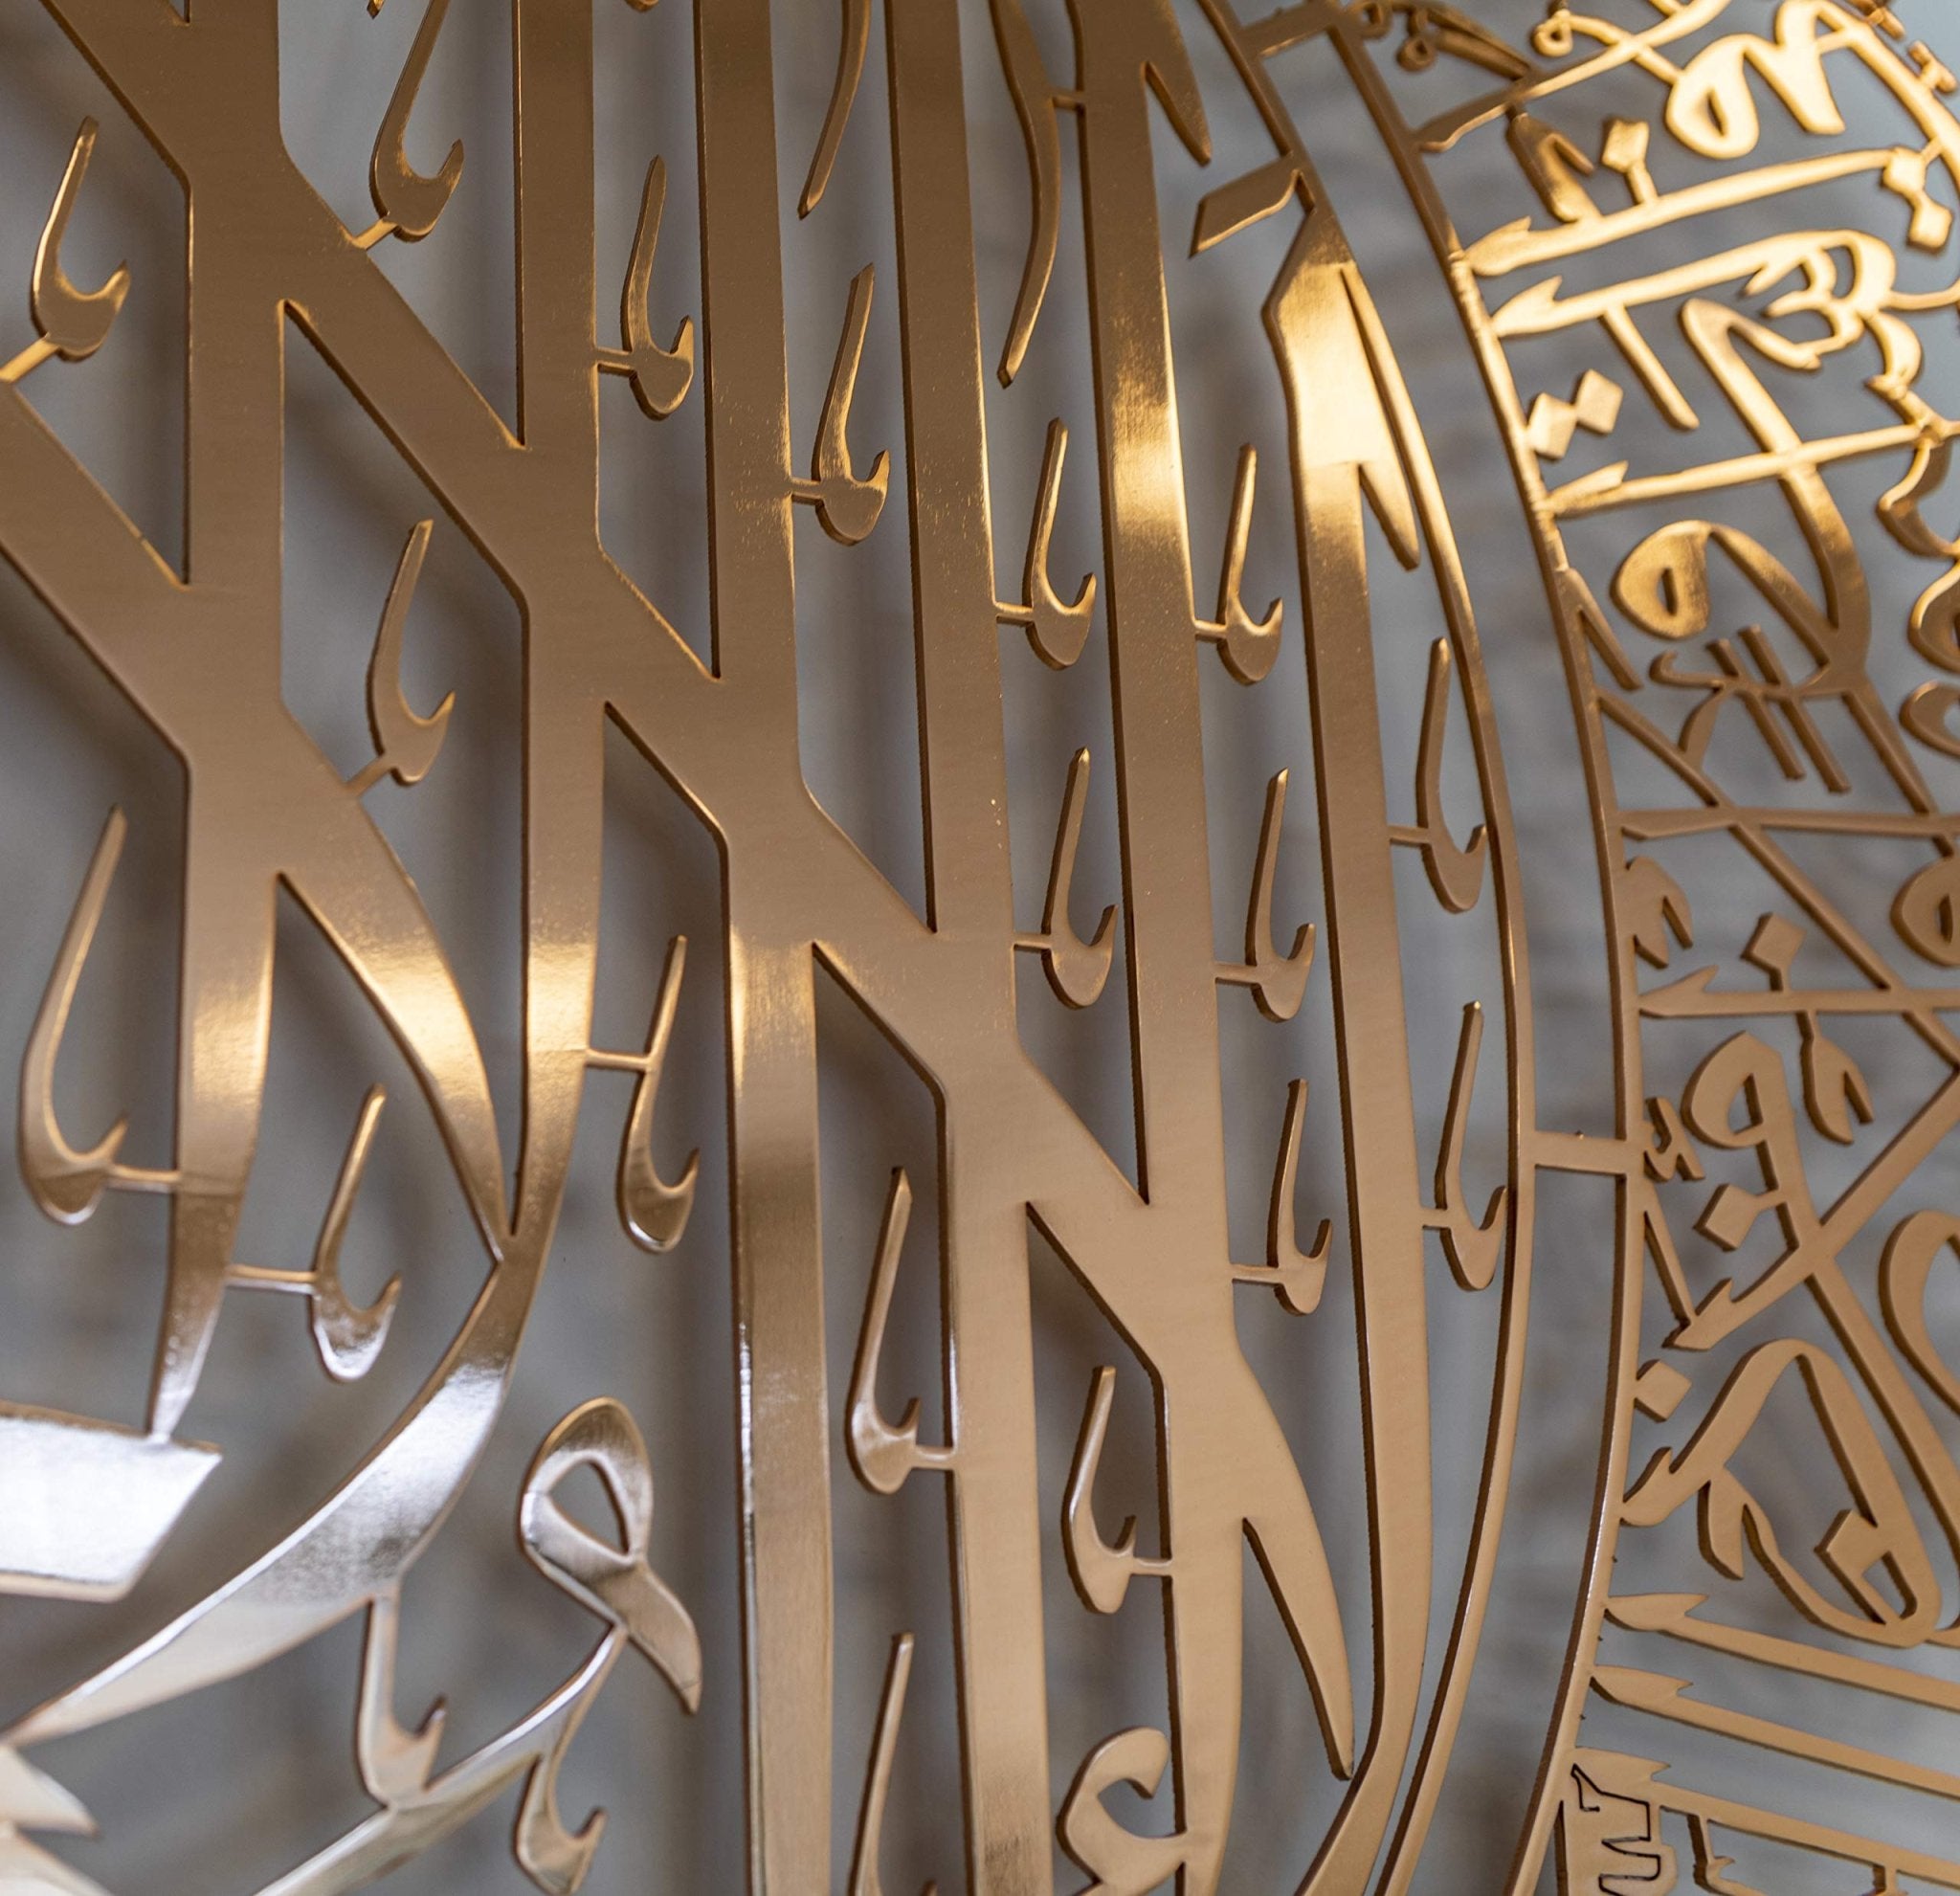 Shiny-Rose-Gold-Crown-Design-Ayatul-Kursi-wall-hanging-ornament